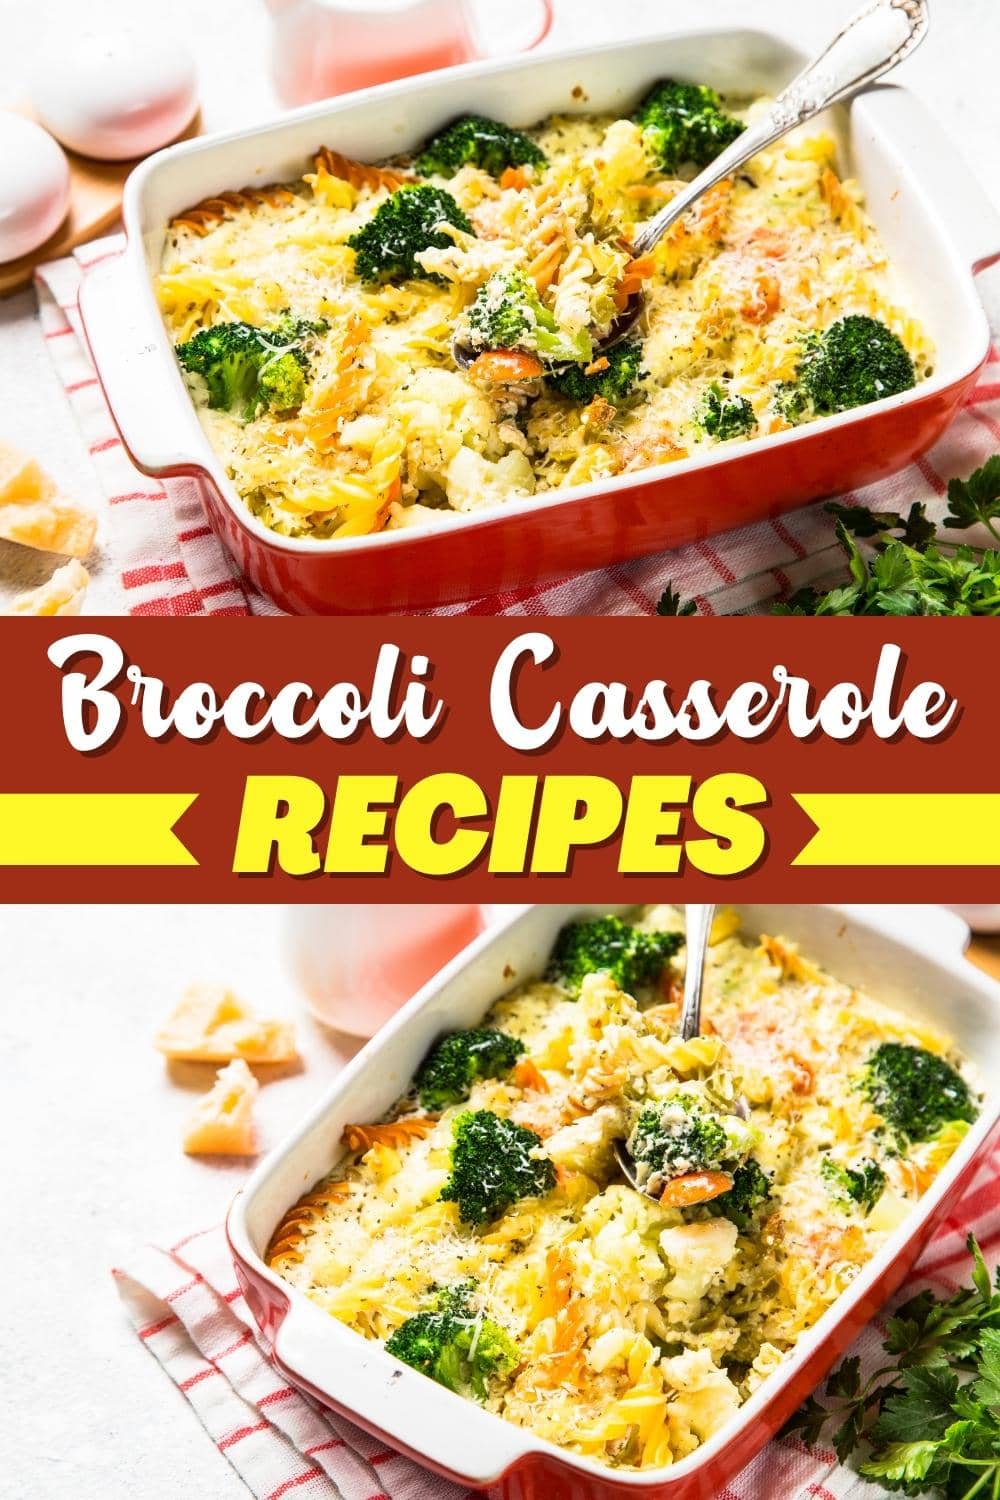 11 Best Broccoli Casserole Recipes - Insanely Good